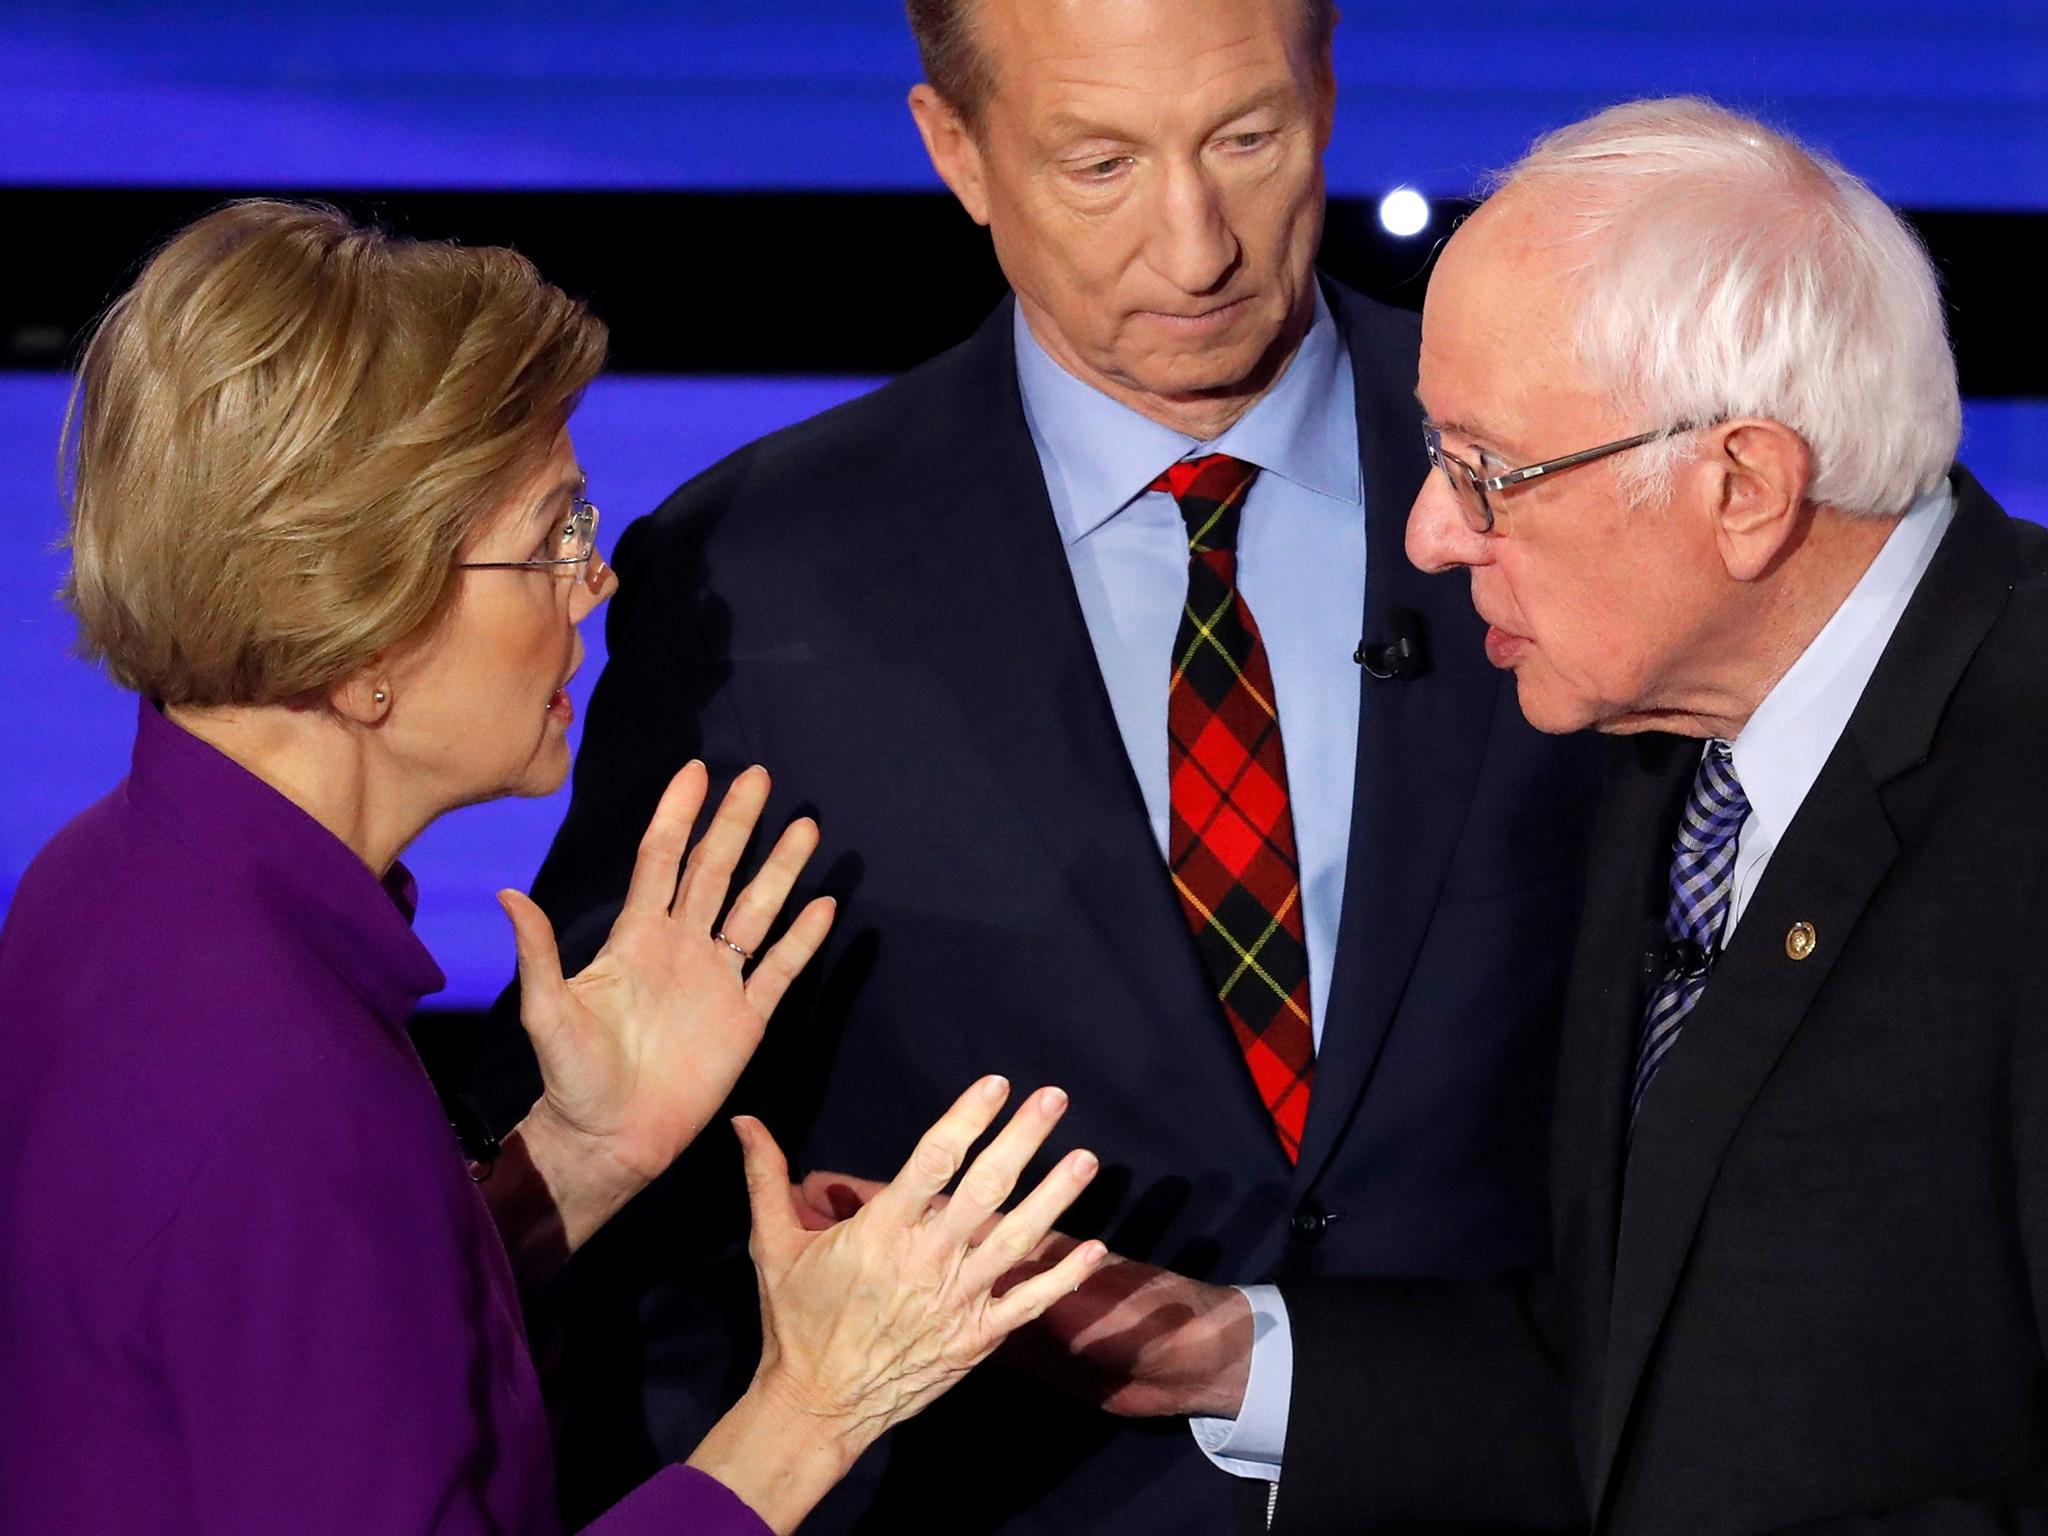 Ms Warren and Mr Sanders quarrelled after the most recent Democratic debate